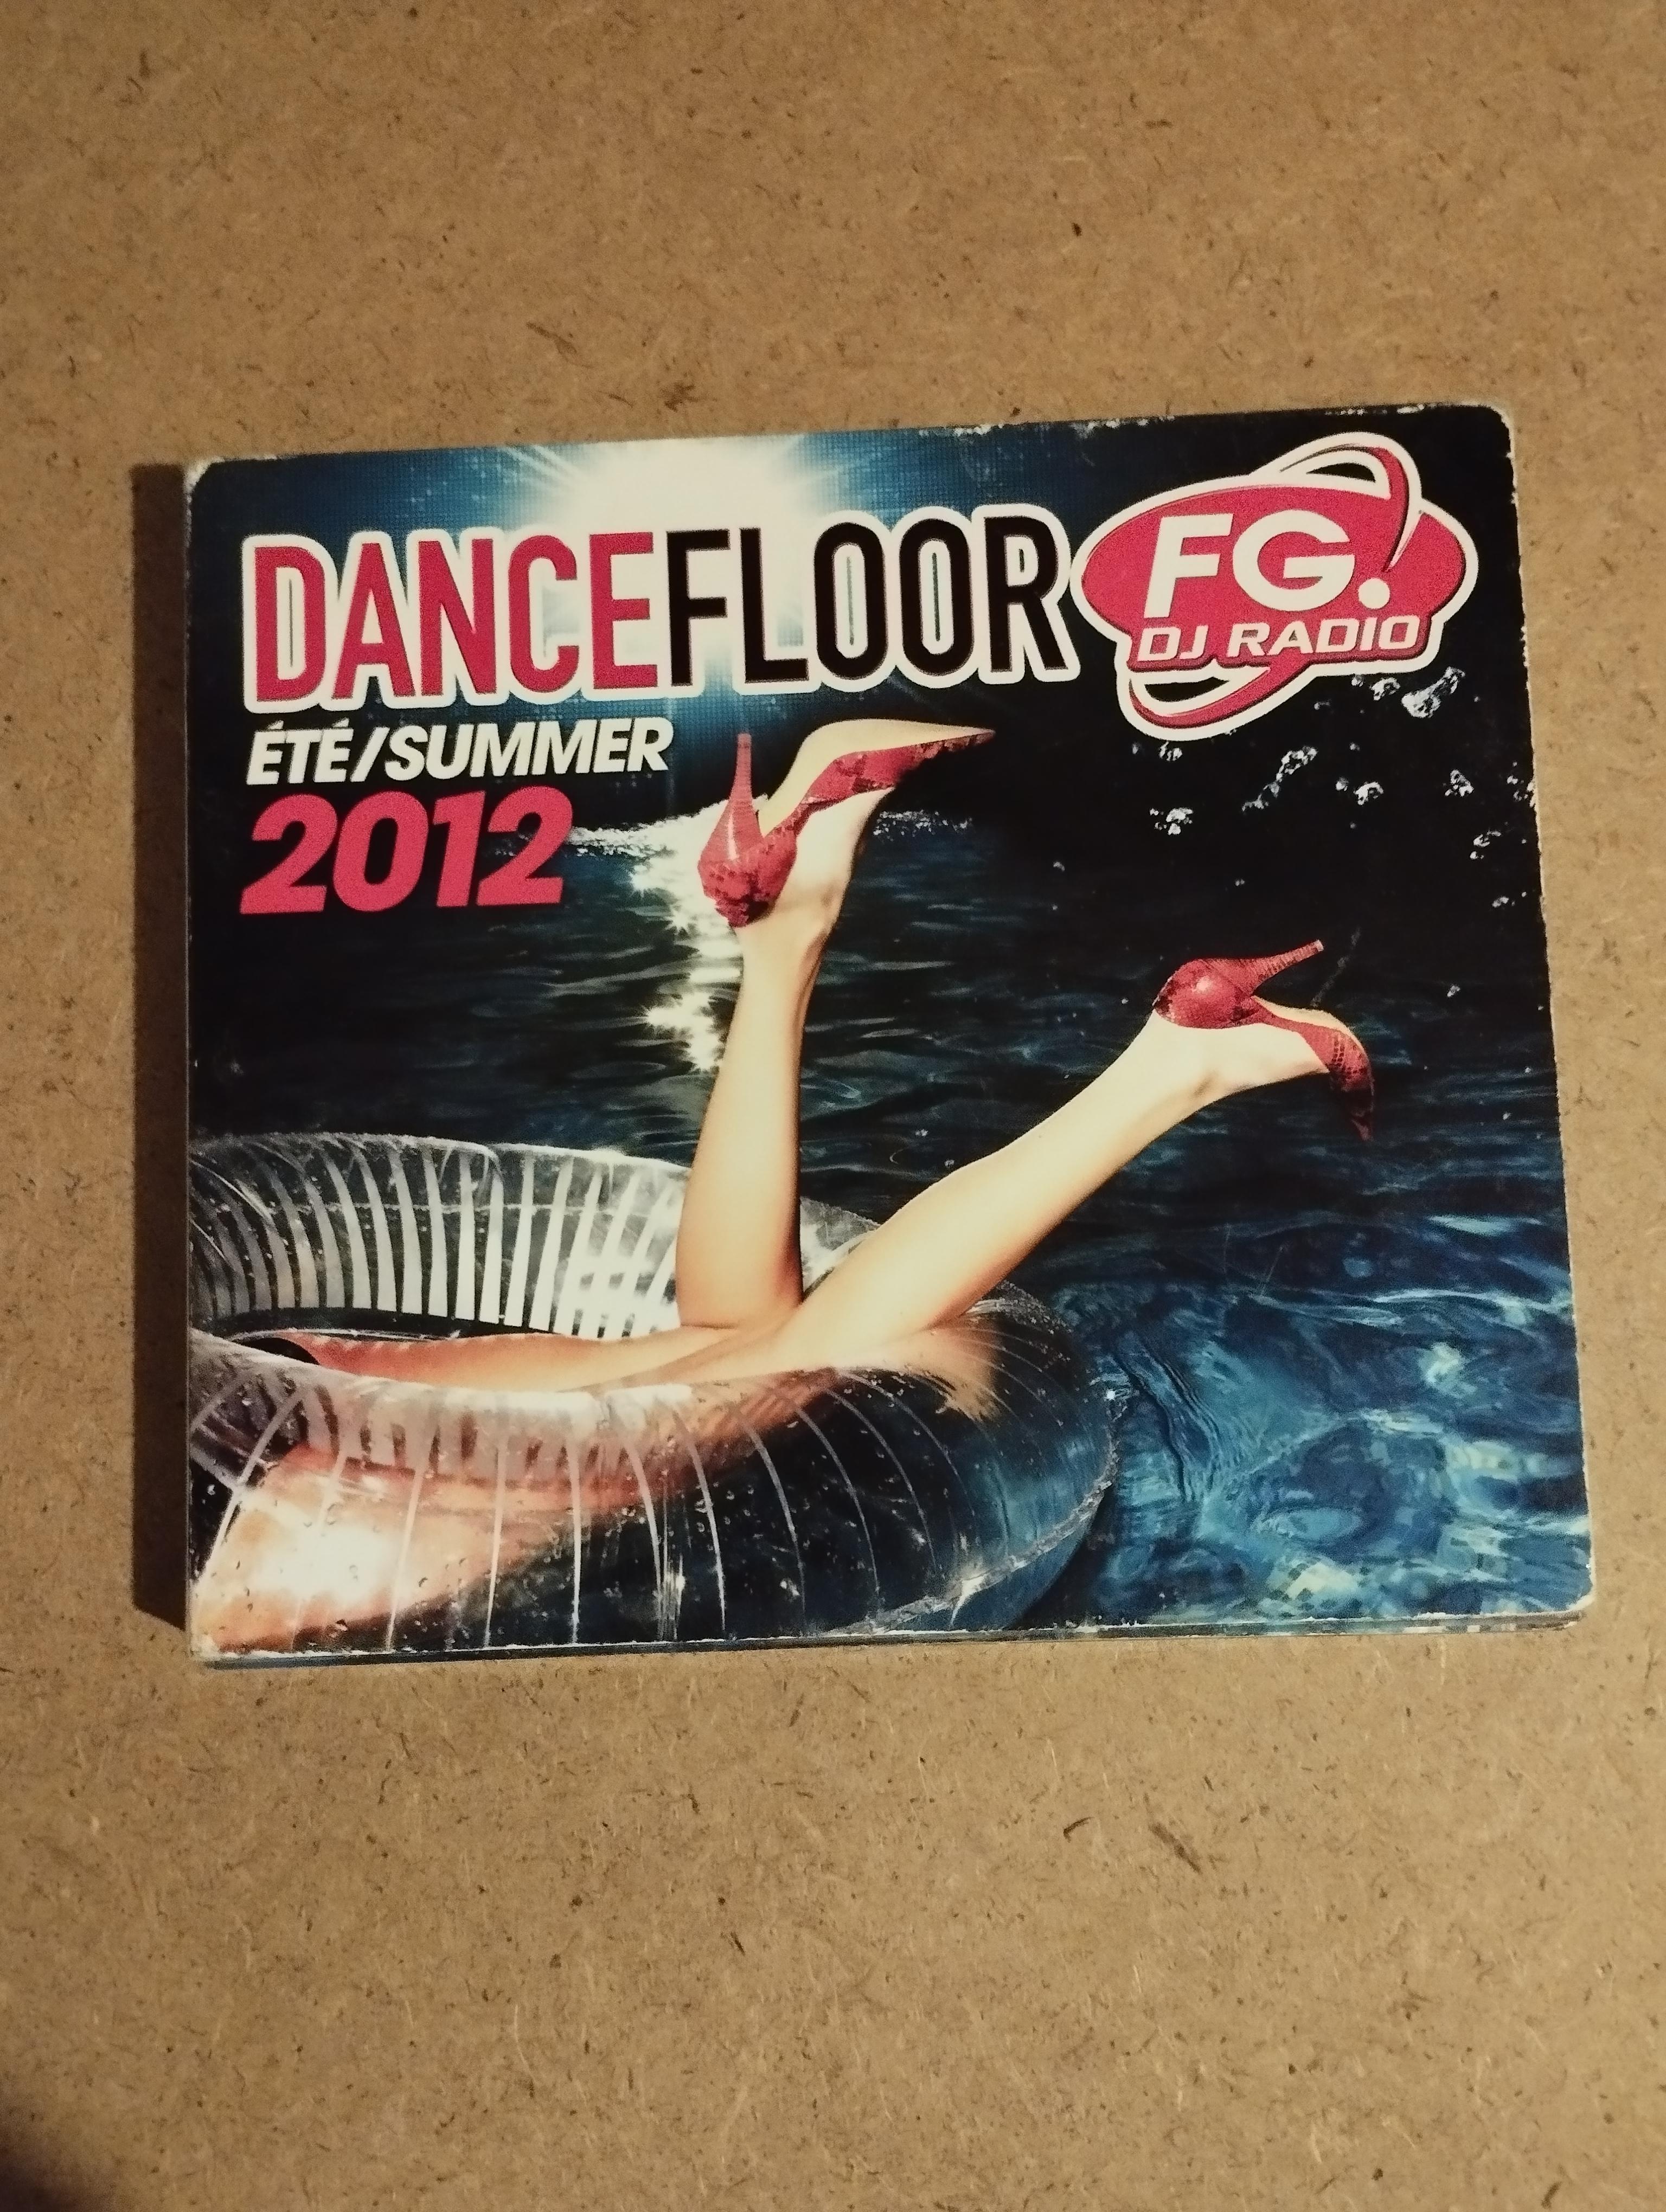 troc de troc cd dancefloor été/summer 2012 image 0